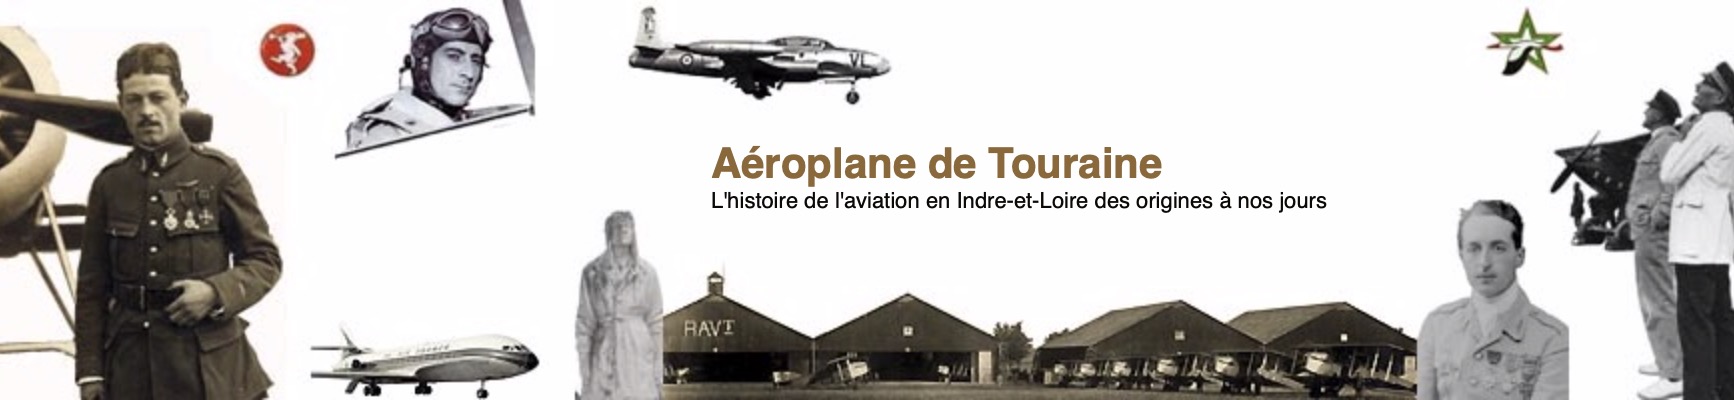 Aéroplane de Touraine